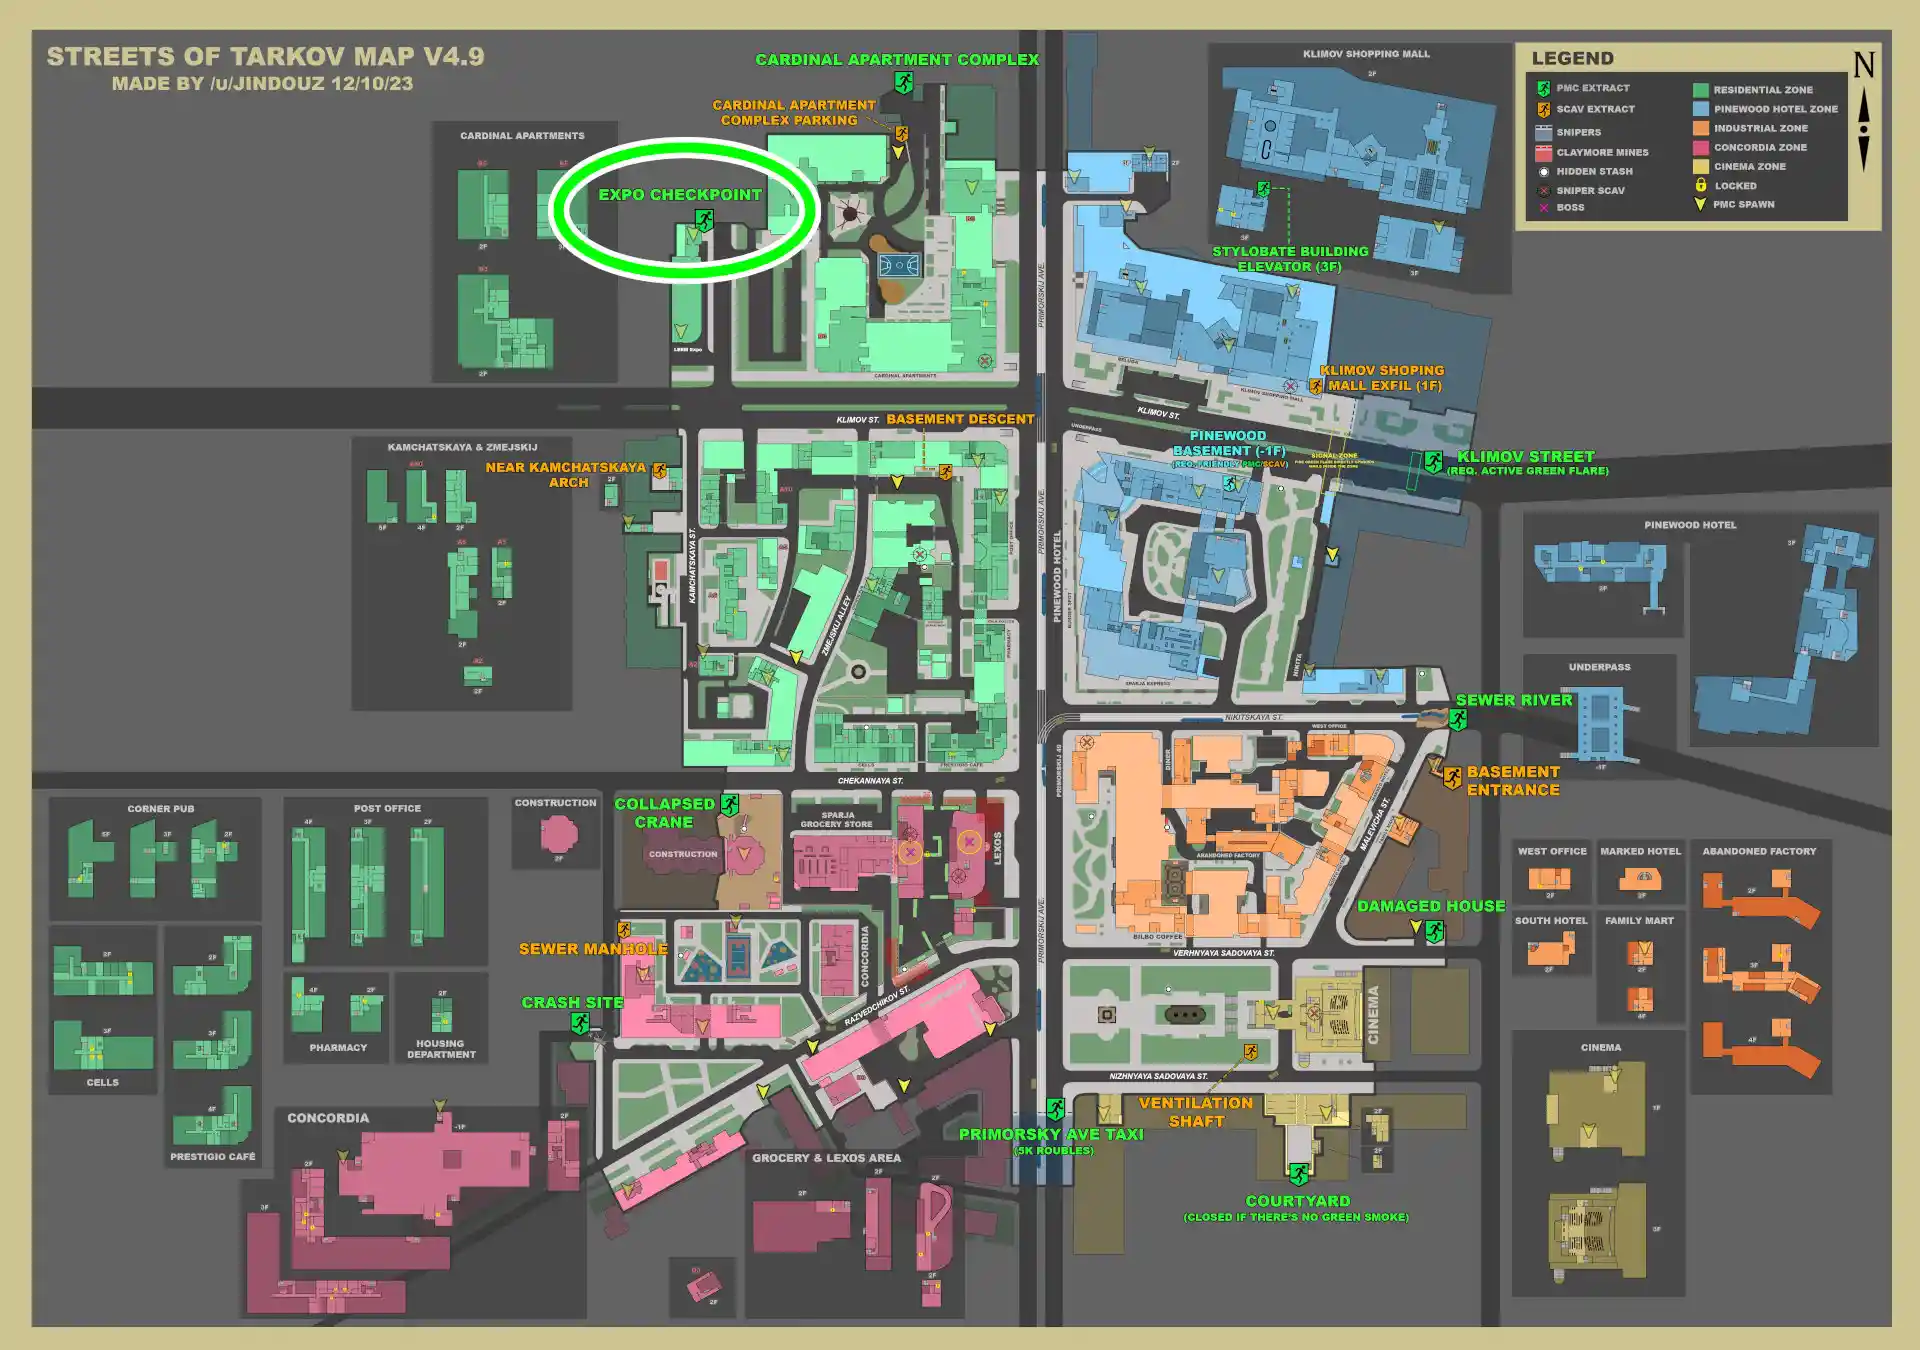 STREETS_OF_TARKOV-ESC-Expo_Checkpoint-MAP.jpg